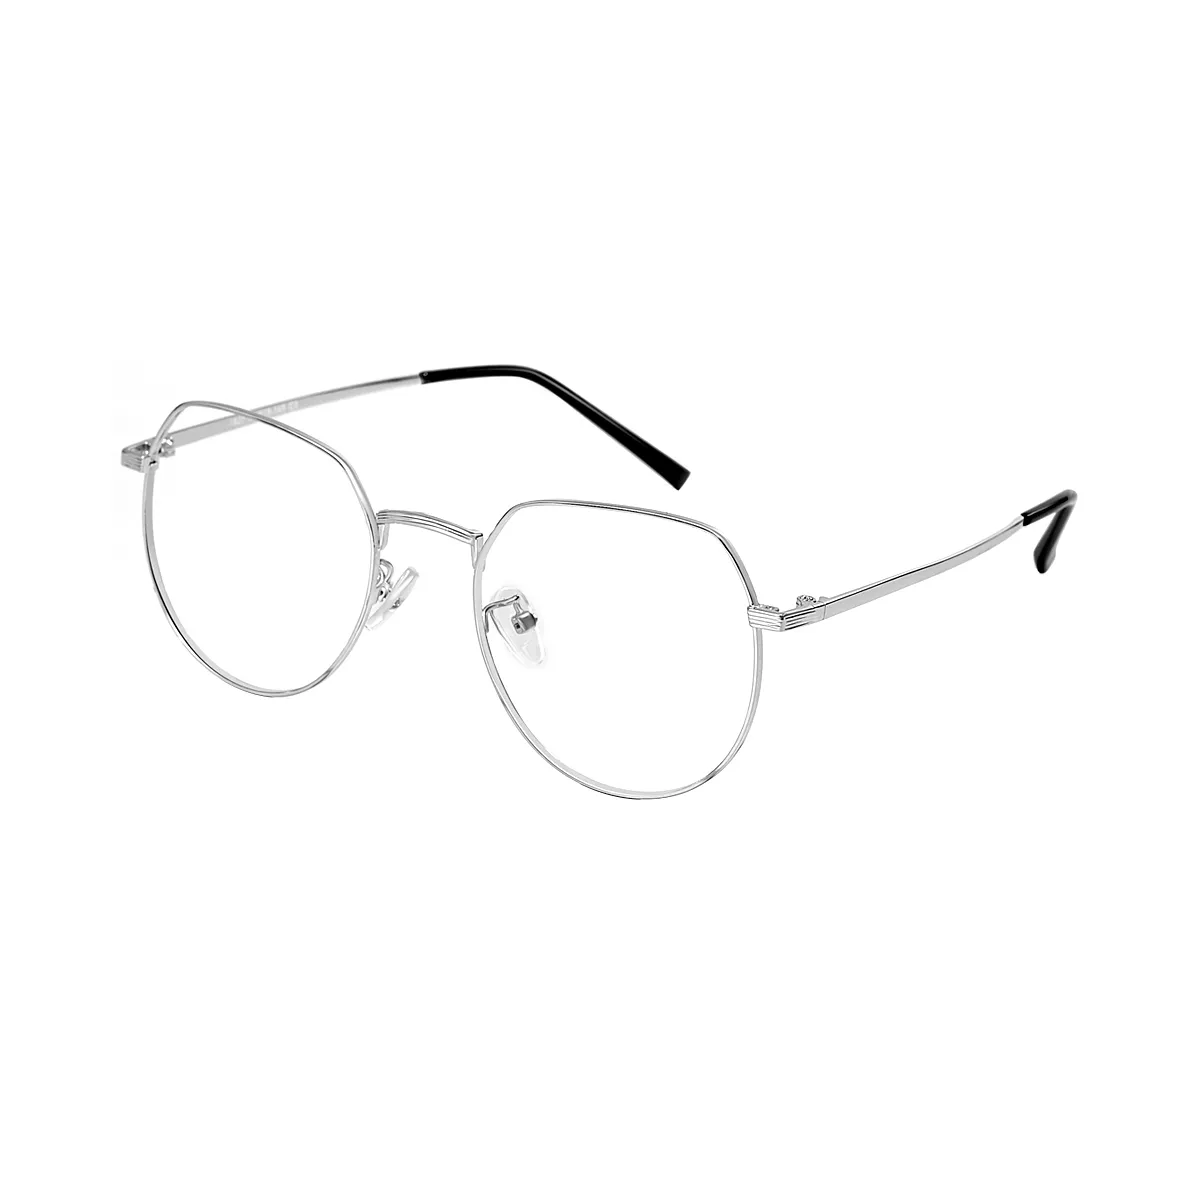 Izabel - Oval Silver Glasses for Women